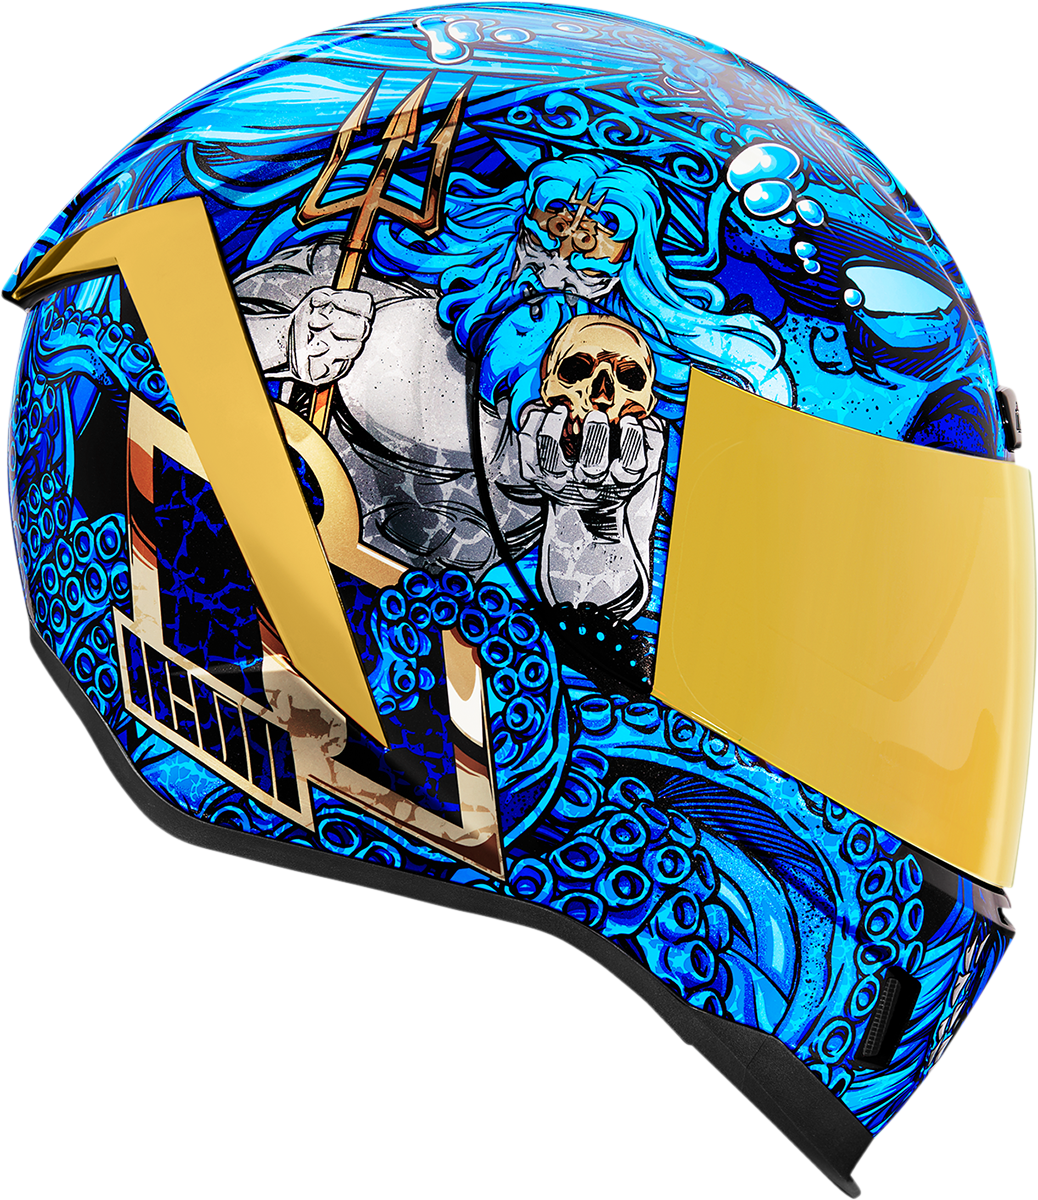 ICON Airform™ Helmet - Ships Company - Blue